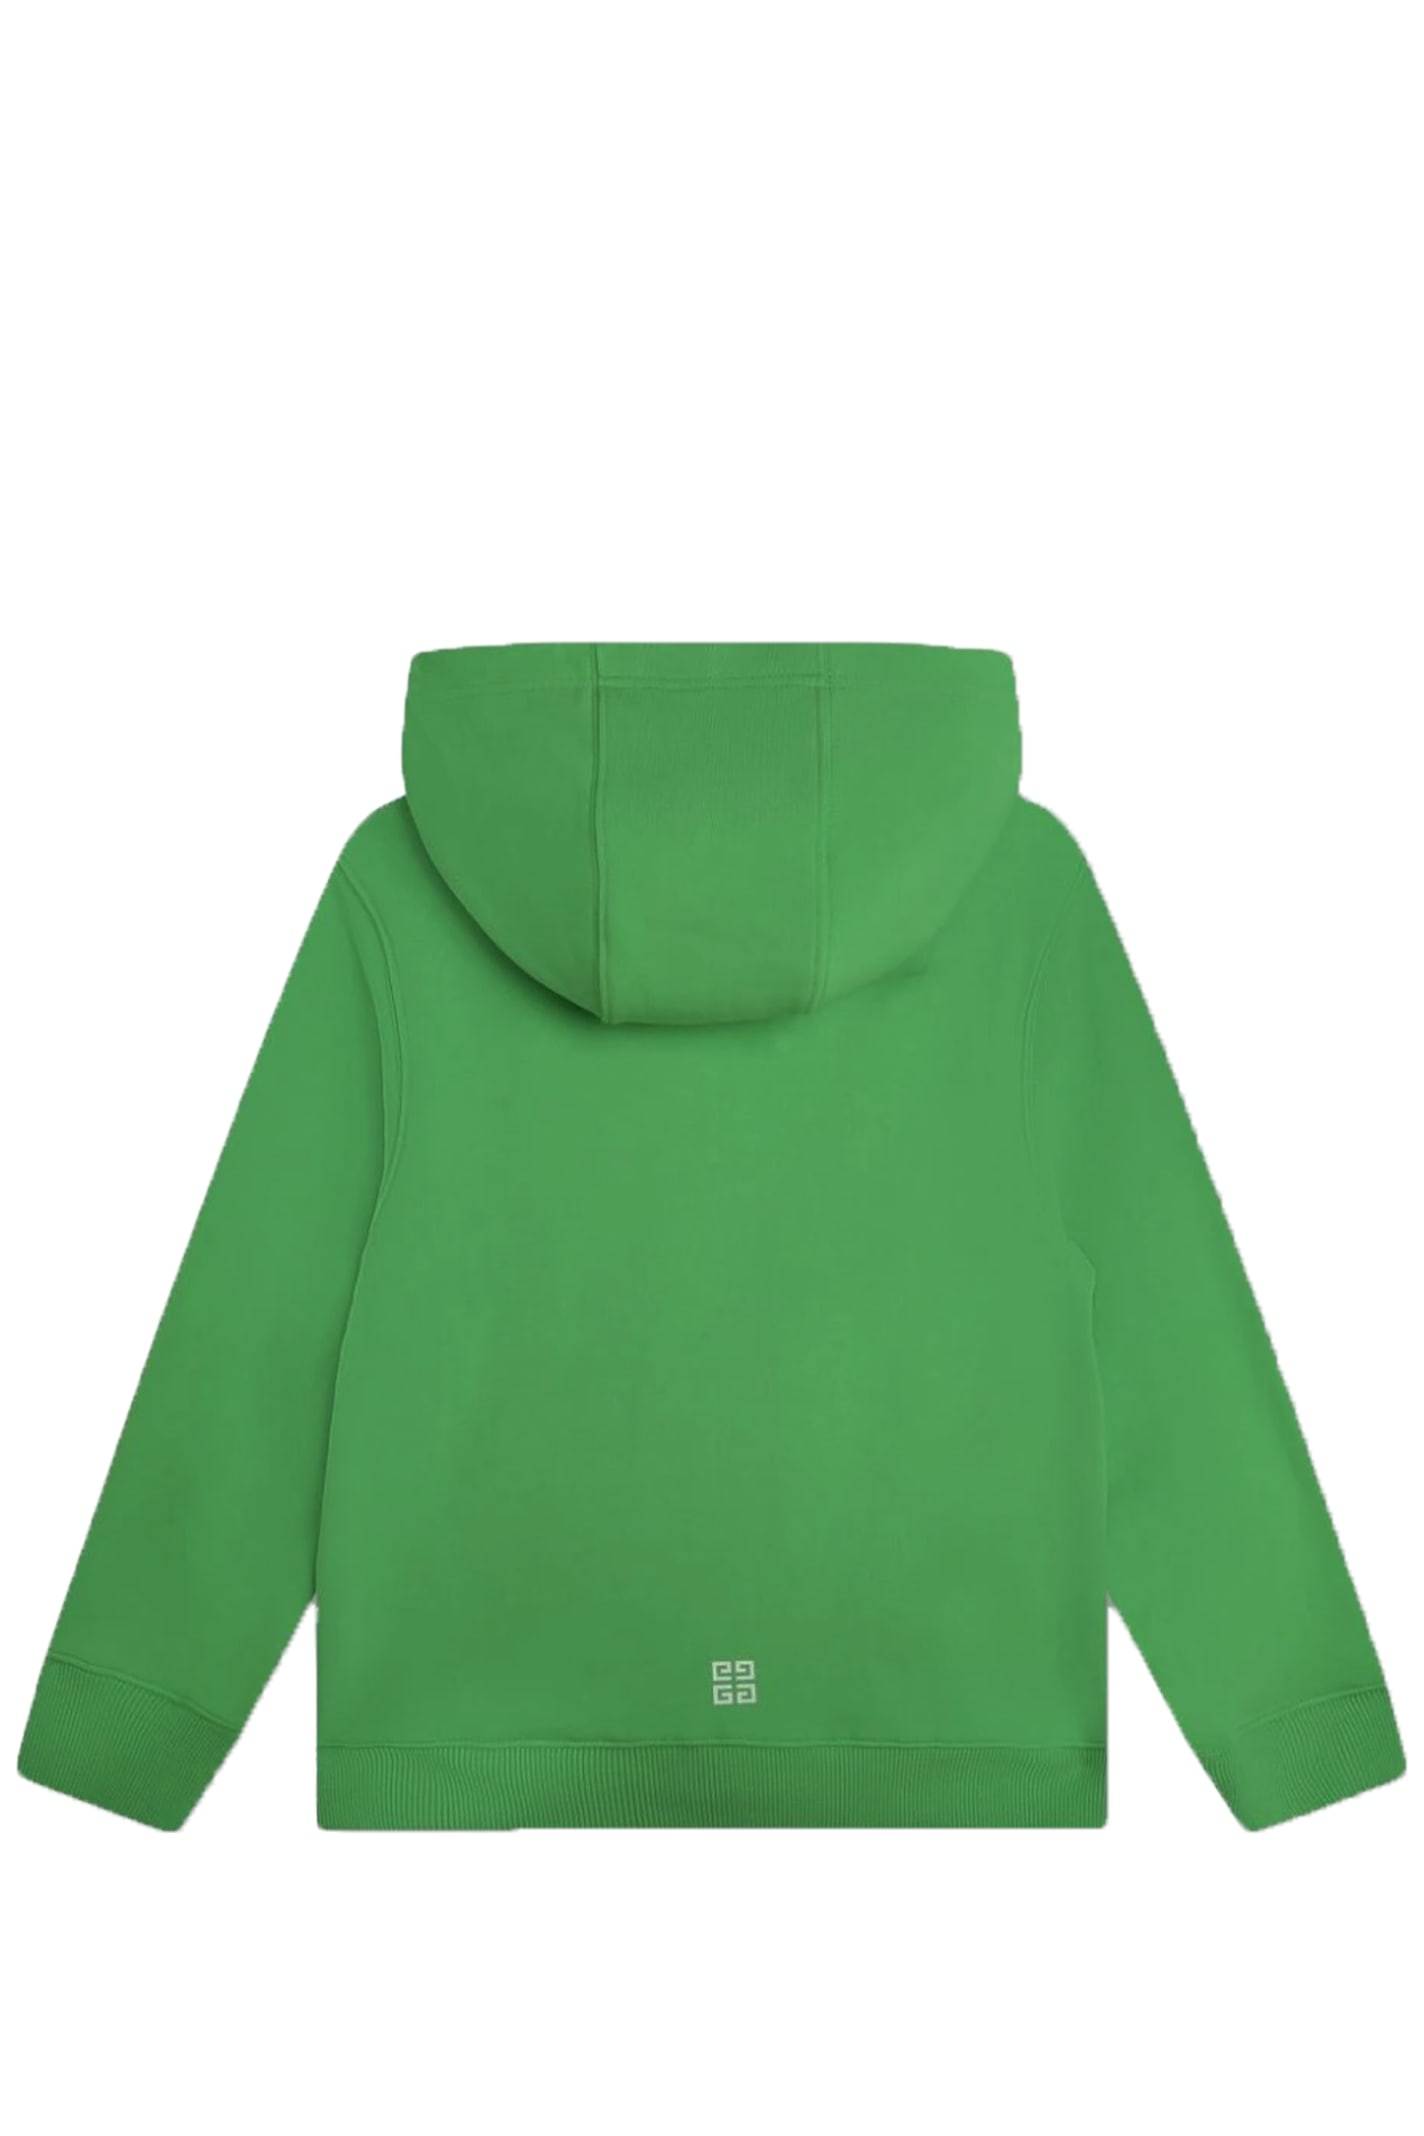 Shop Givenchy Sweatshirt In Green